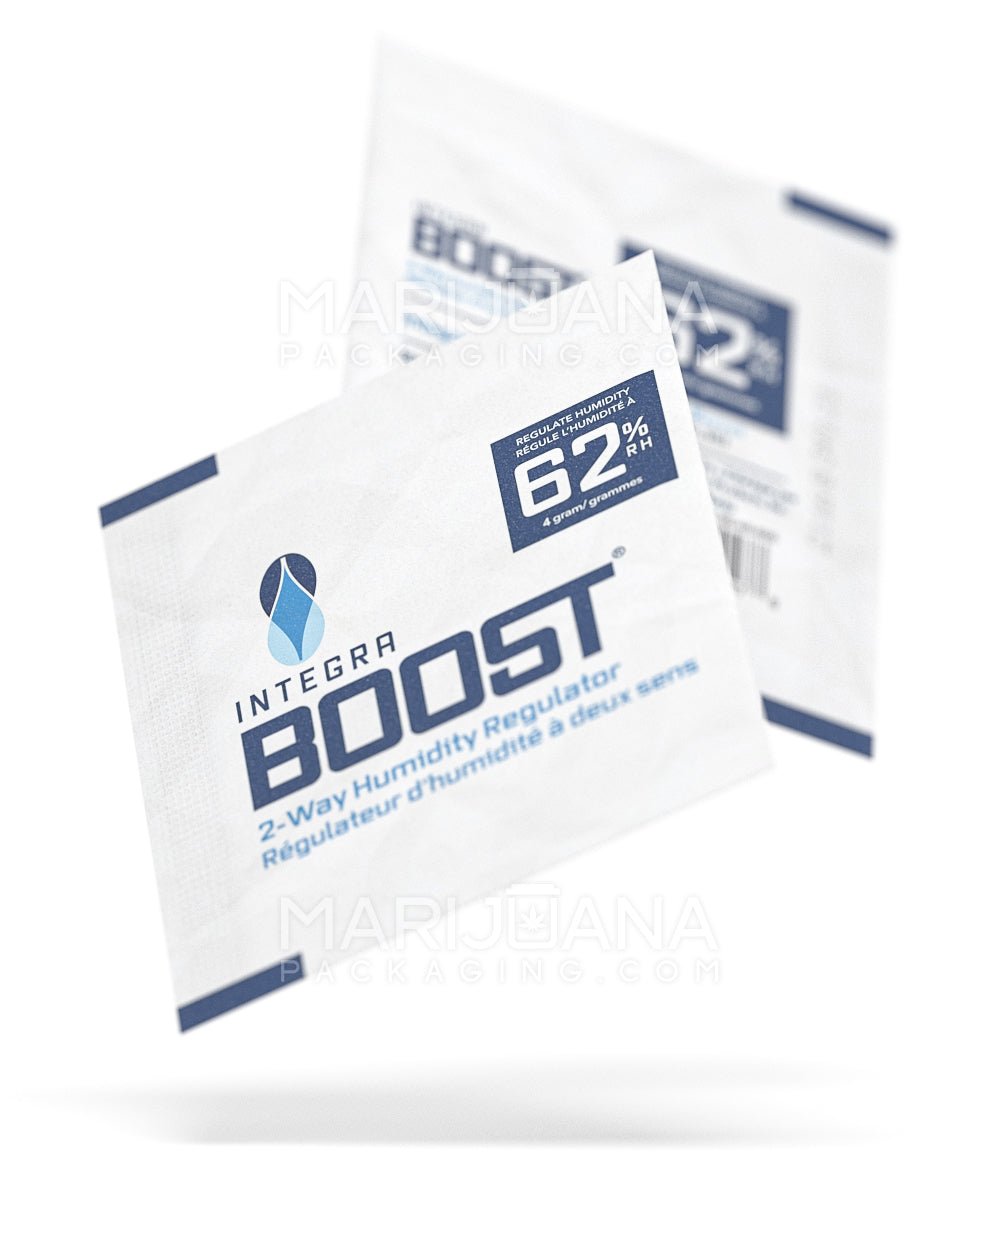 INTEGRA | Boost Control Packs | 4 Grams - 62% - 1000 Count - 6